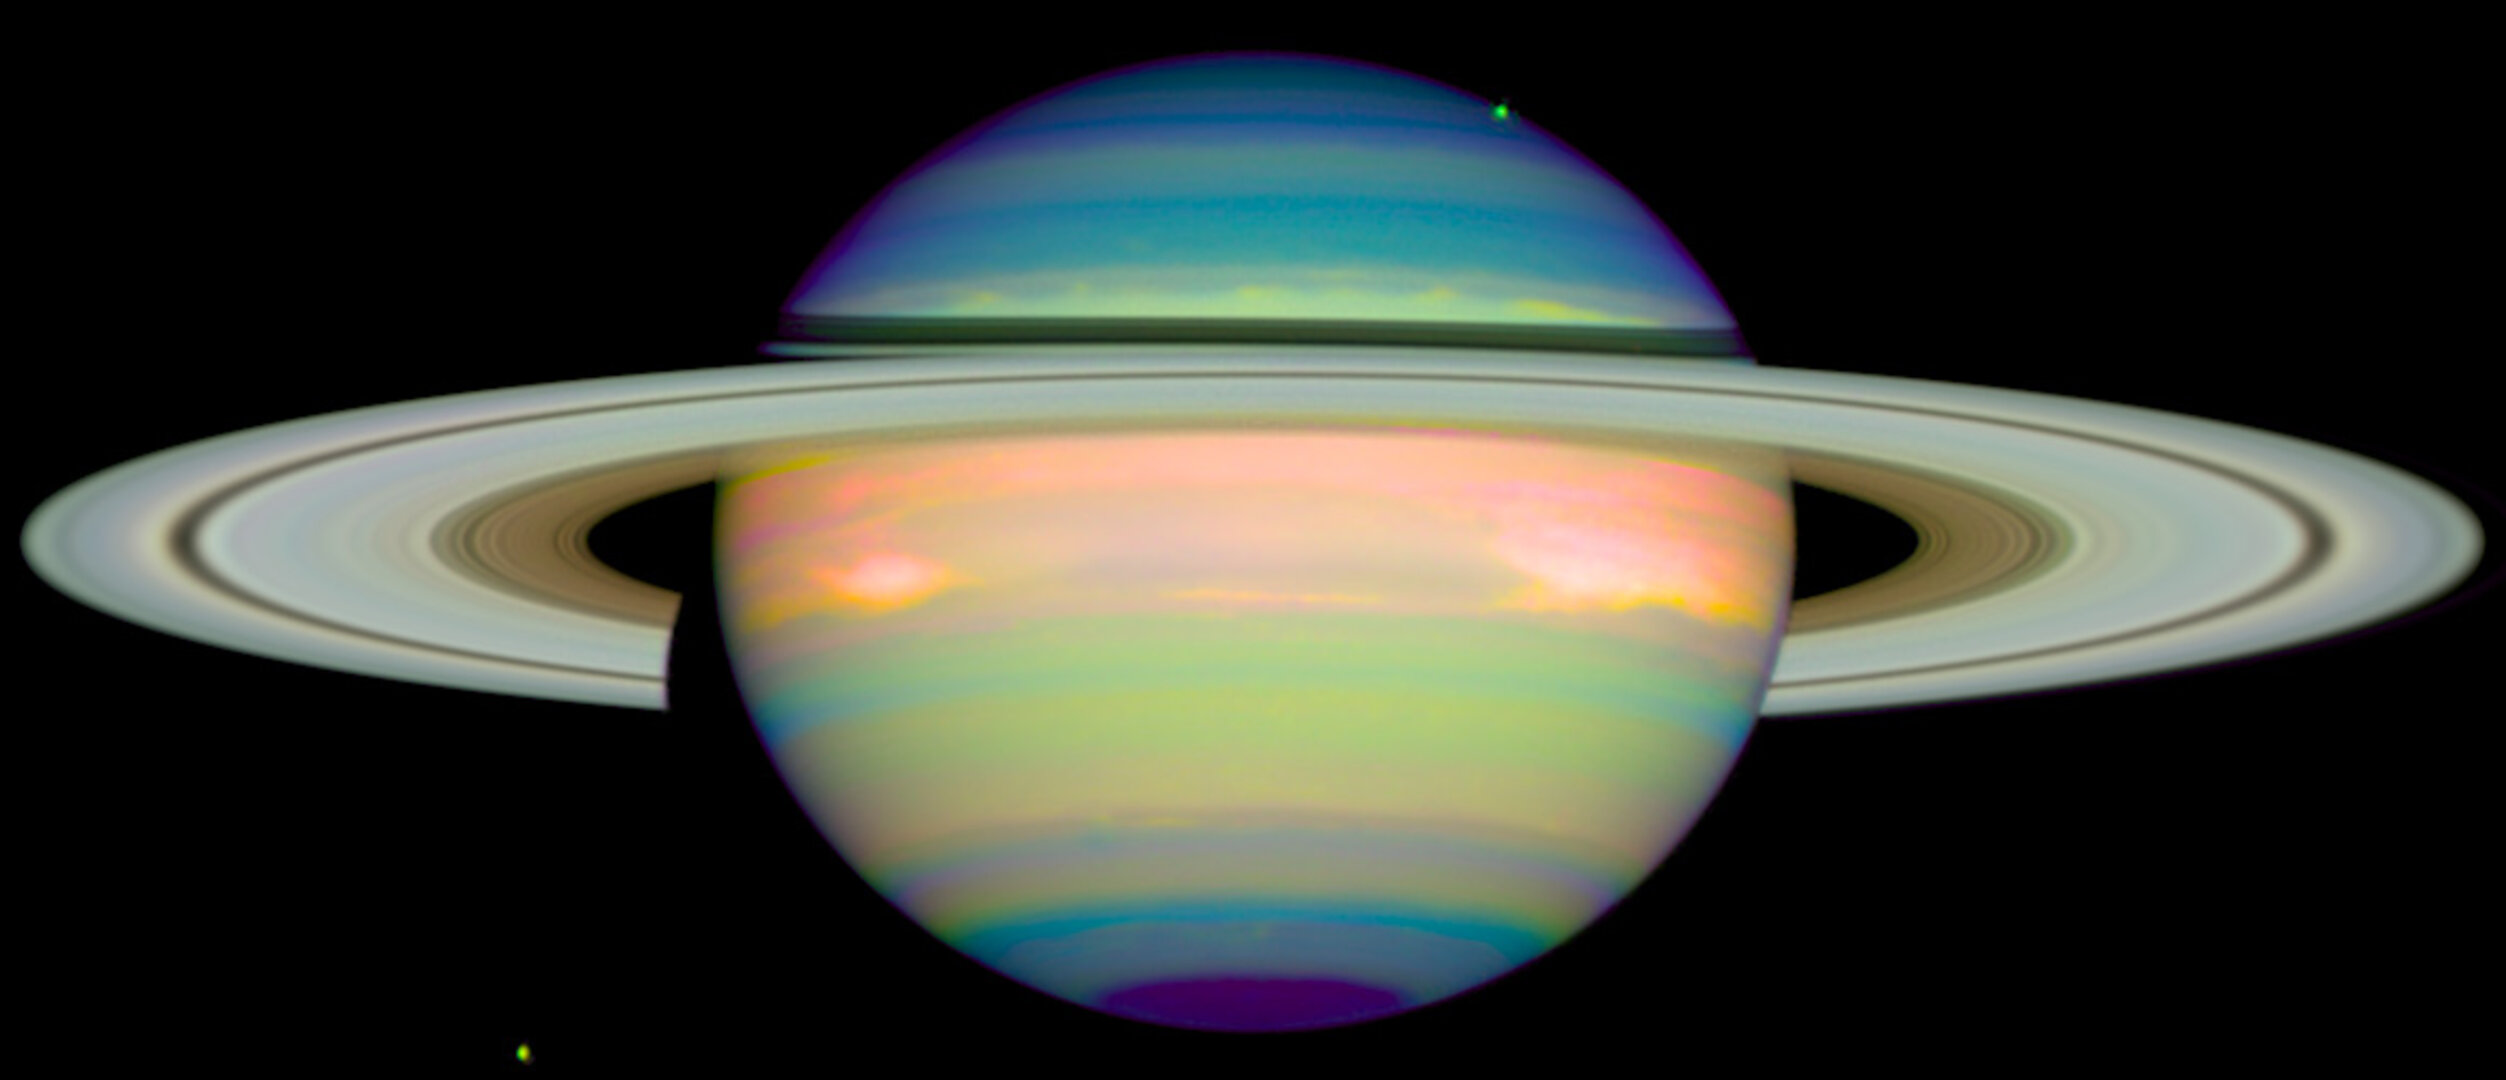 Saturn seen in infrared light